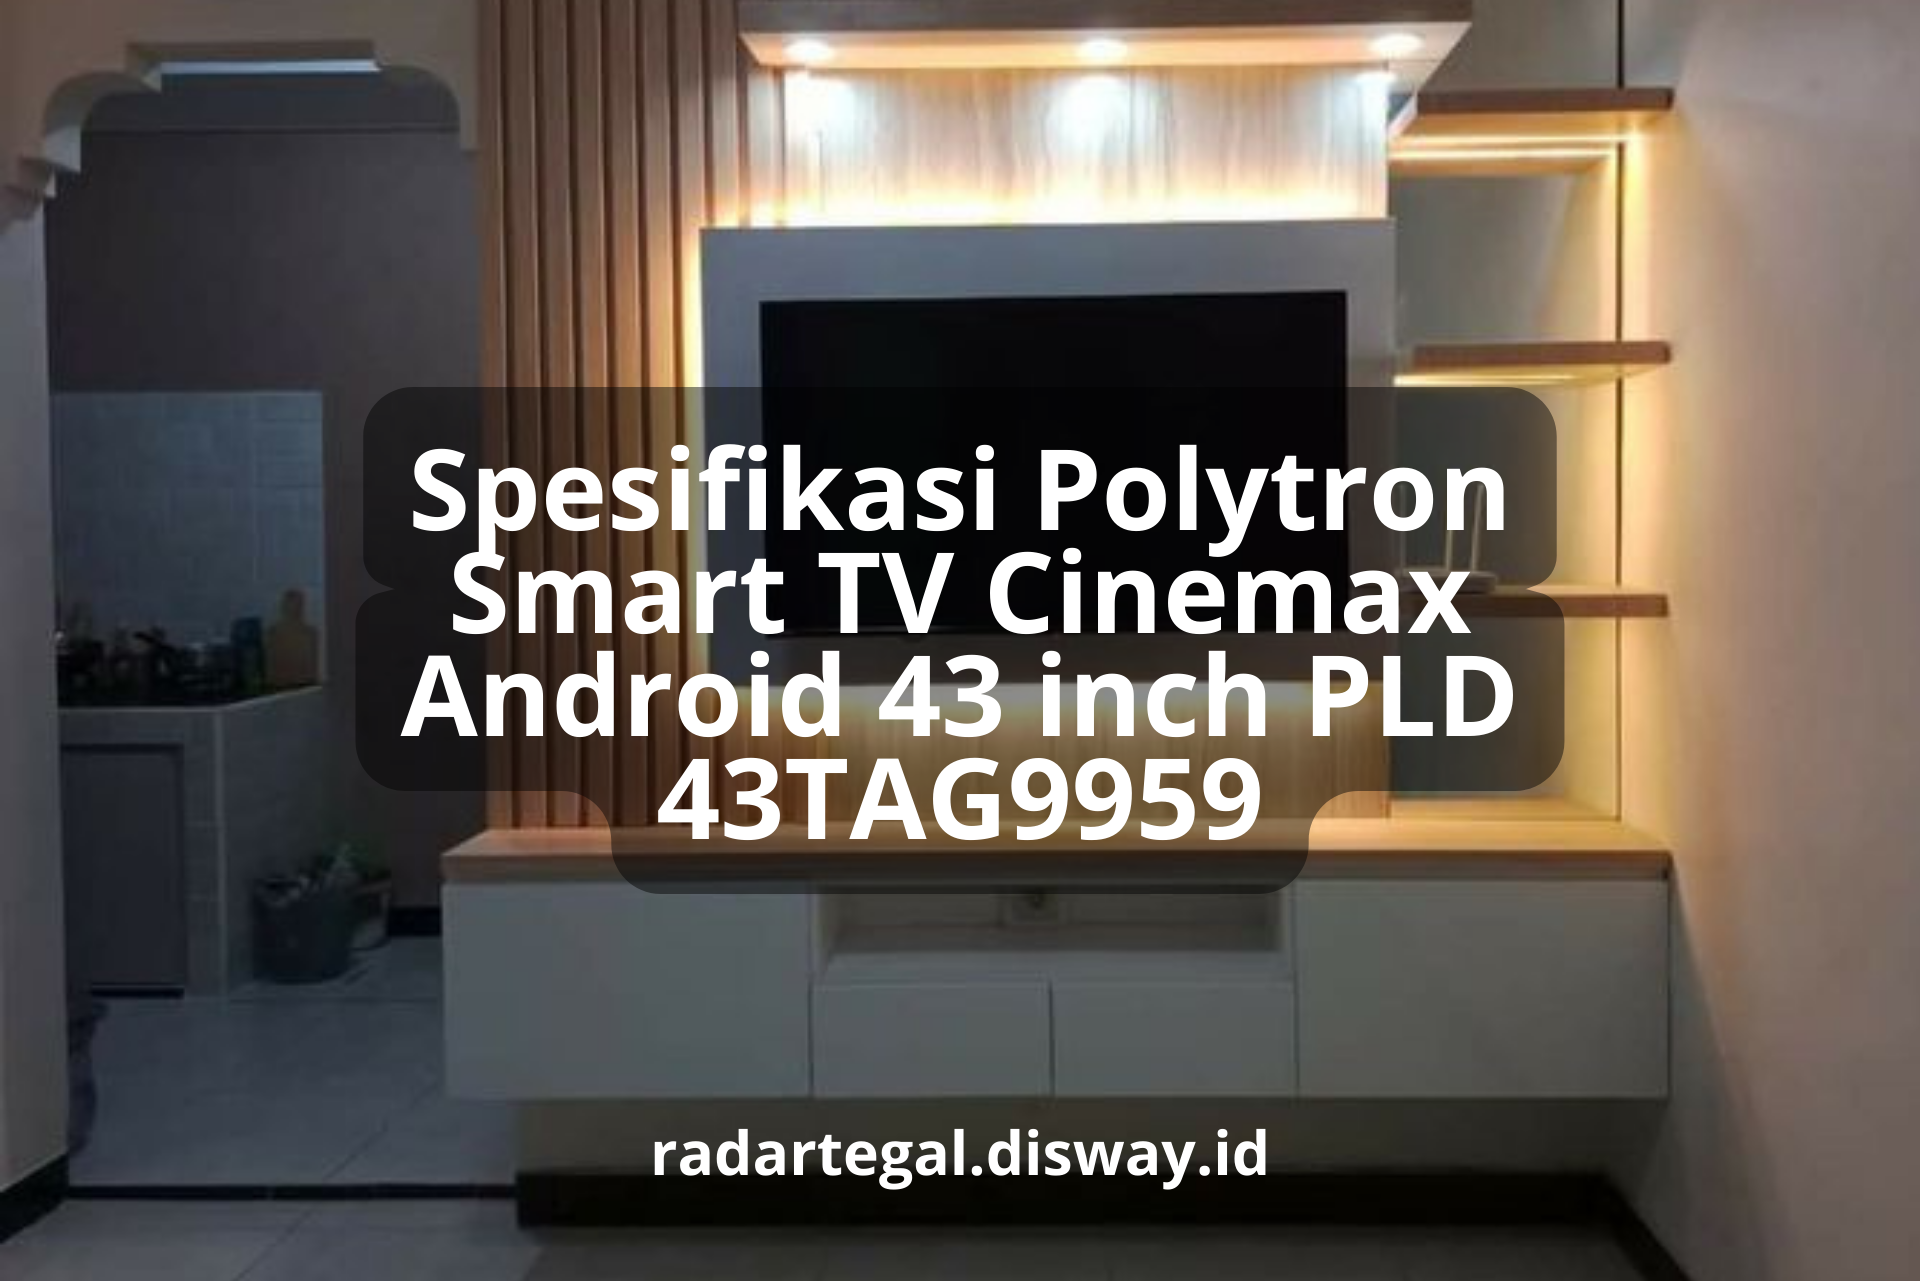 Super Canggih! Berikut Spesifikasi Polytron Smart TV Cinemax Android 43 inch PLD 43TAG9959 